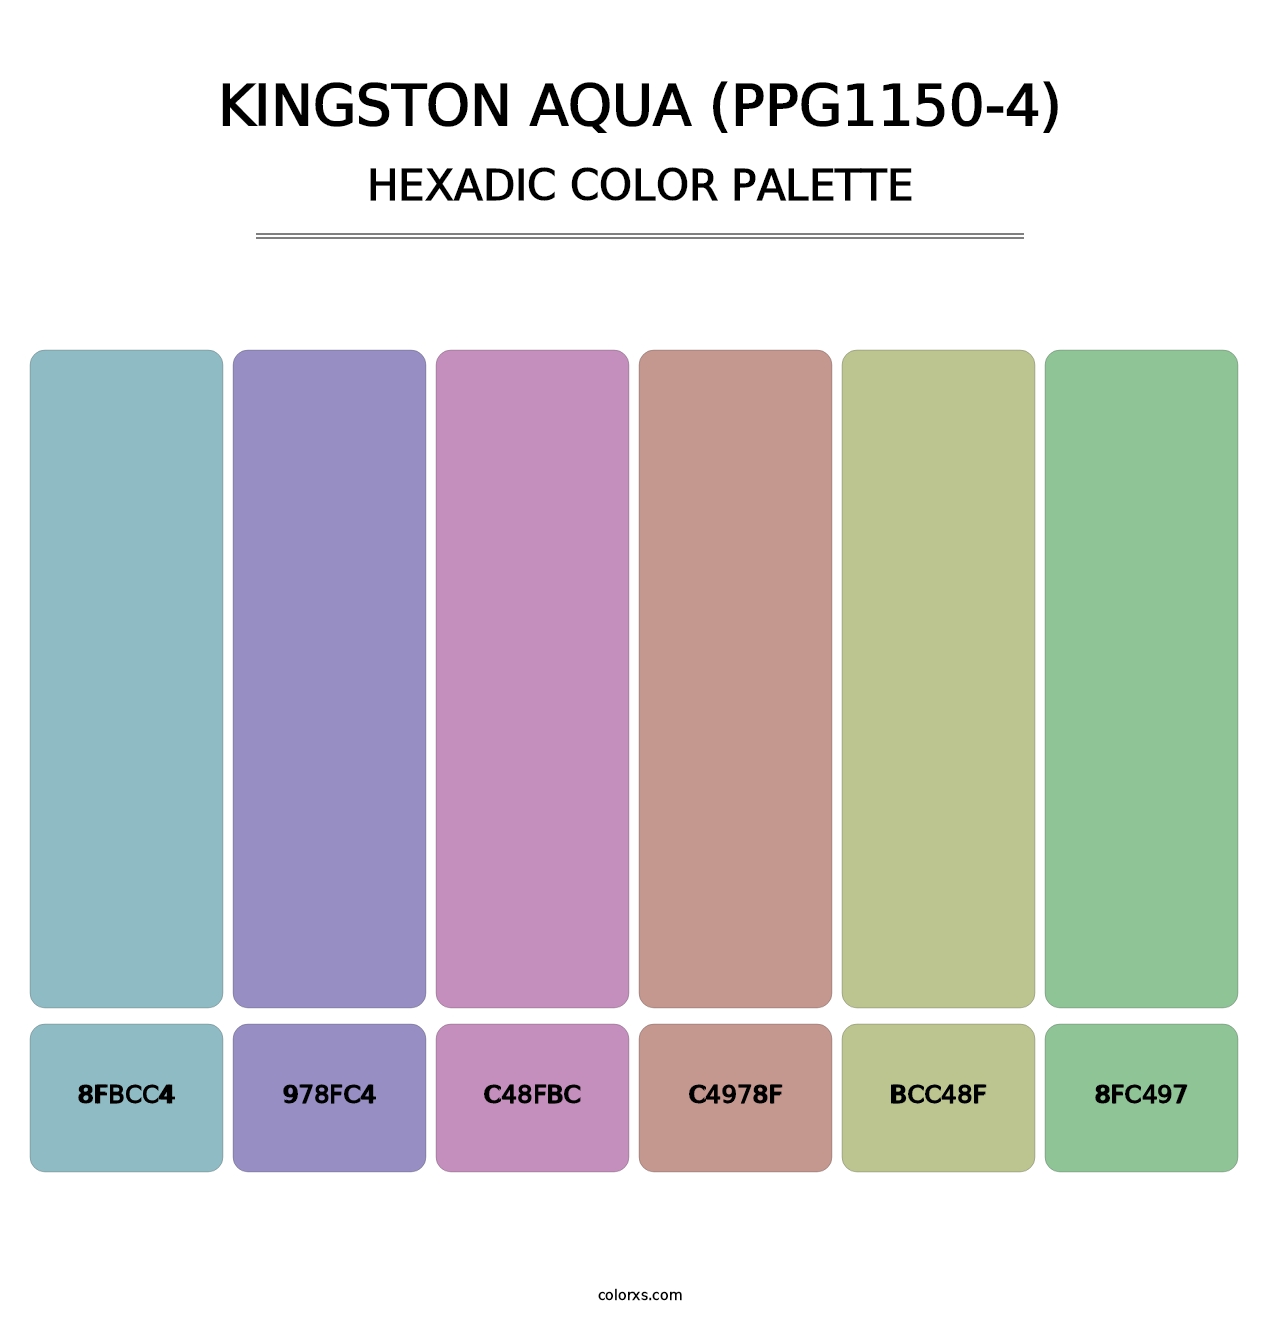 Kingston Aqua (PPG1150-4) - Hexadic Color Palette